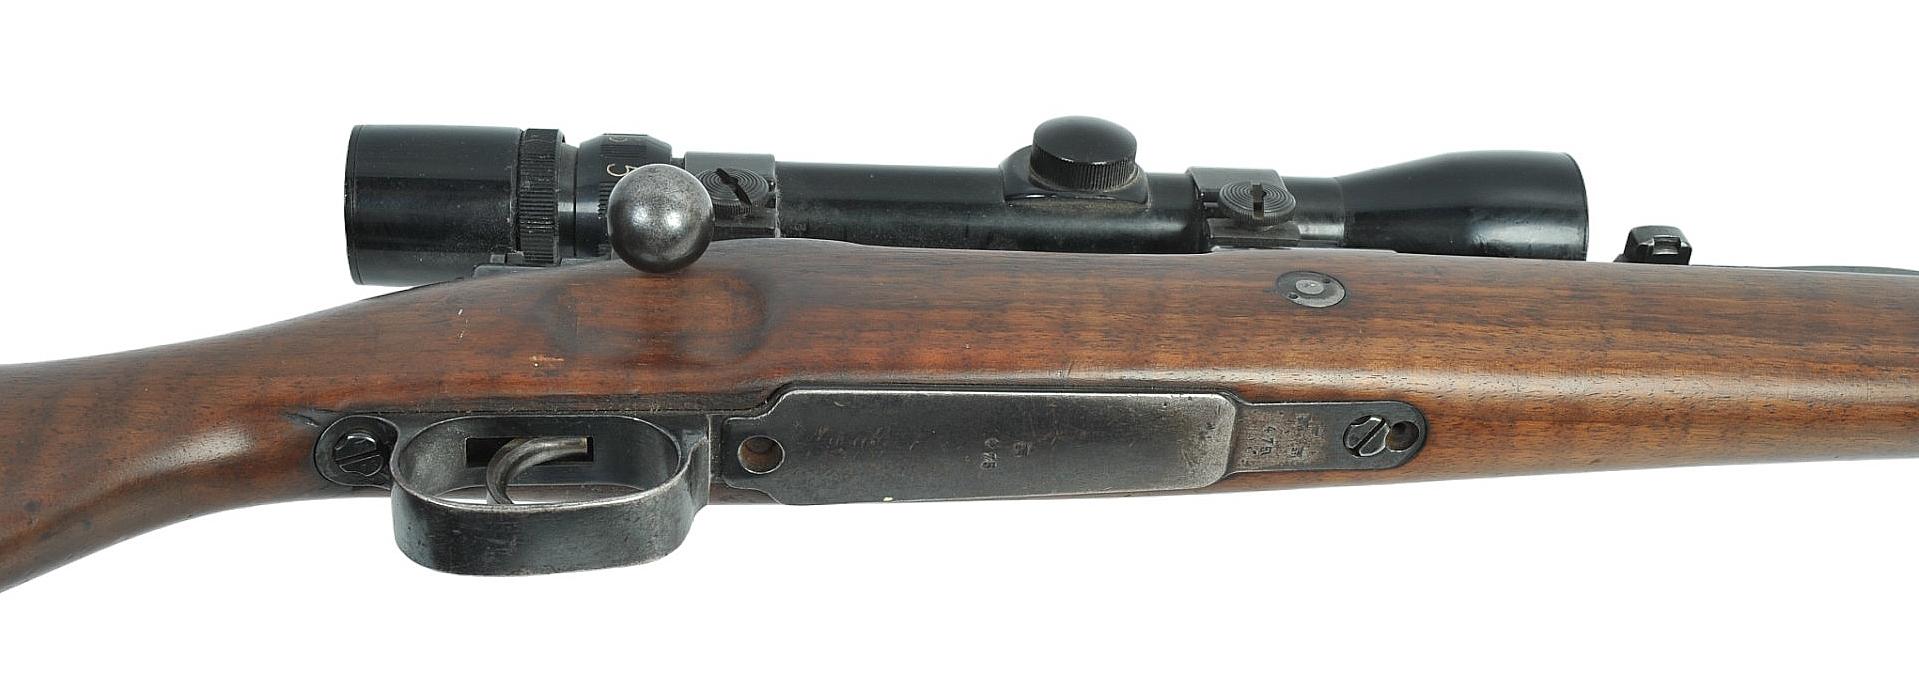 Sporterized German K98k 8mm Mauser Bolt-action Rifle FFL Required: 475(M1F1)